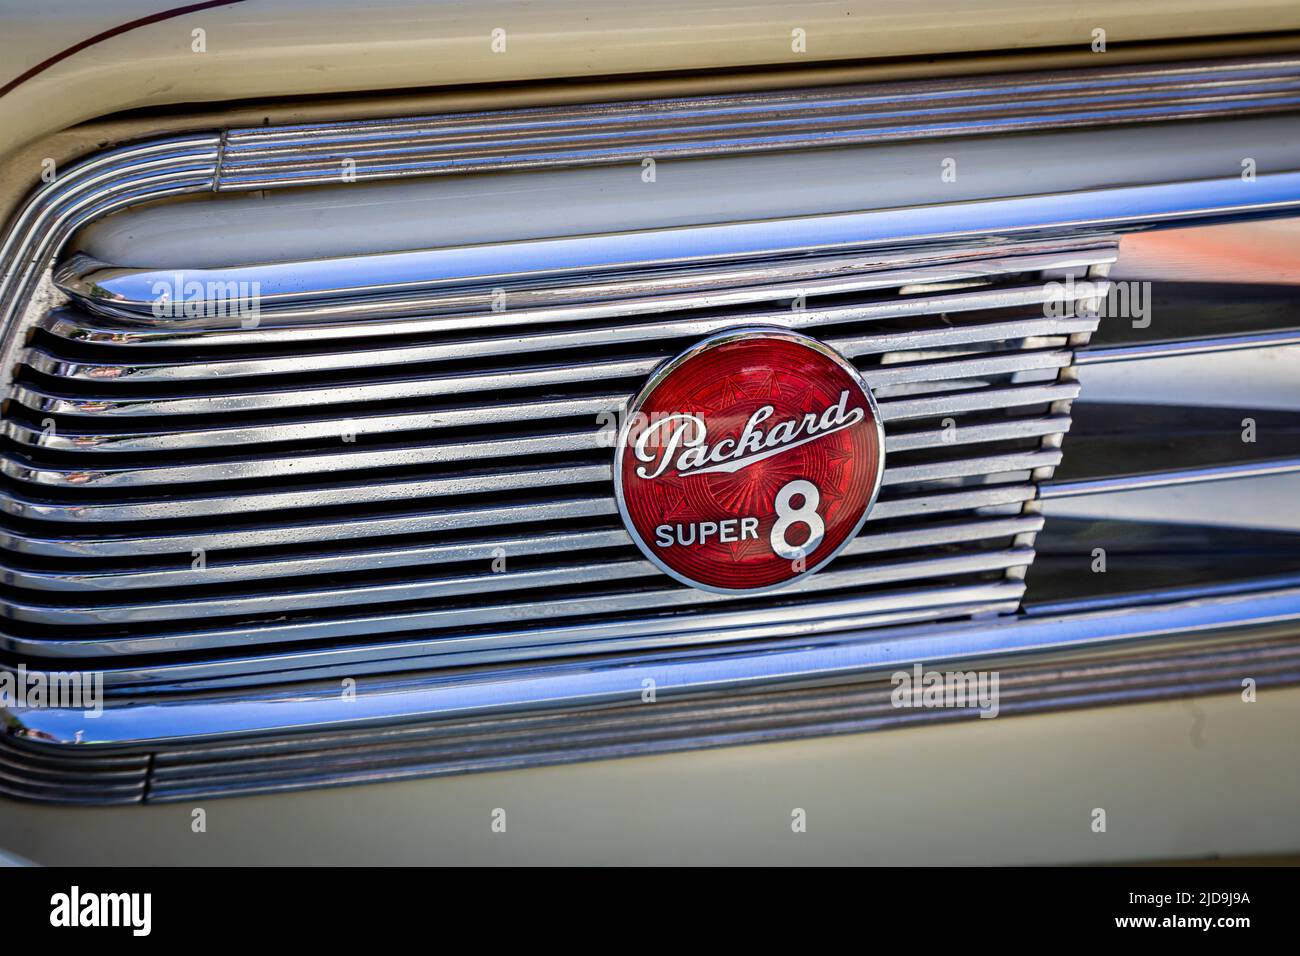 Packard Super 8 Banque D'Images